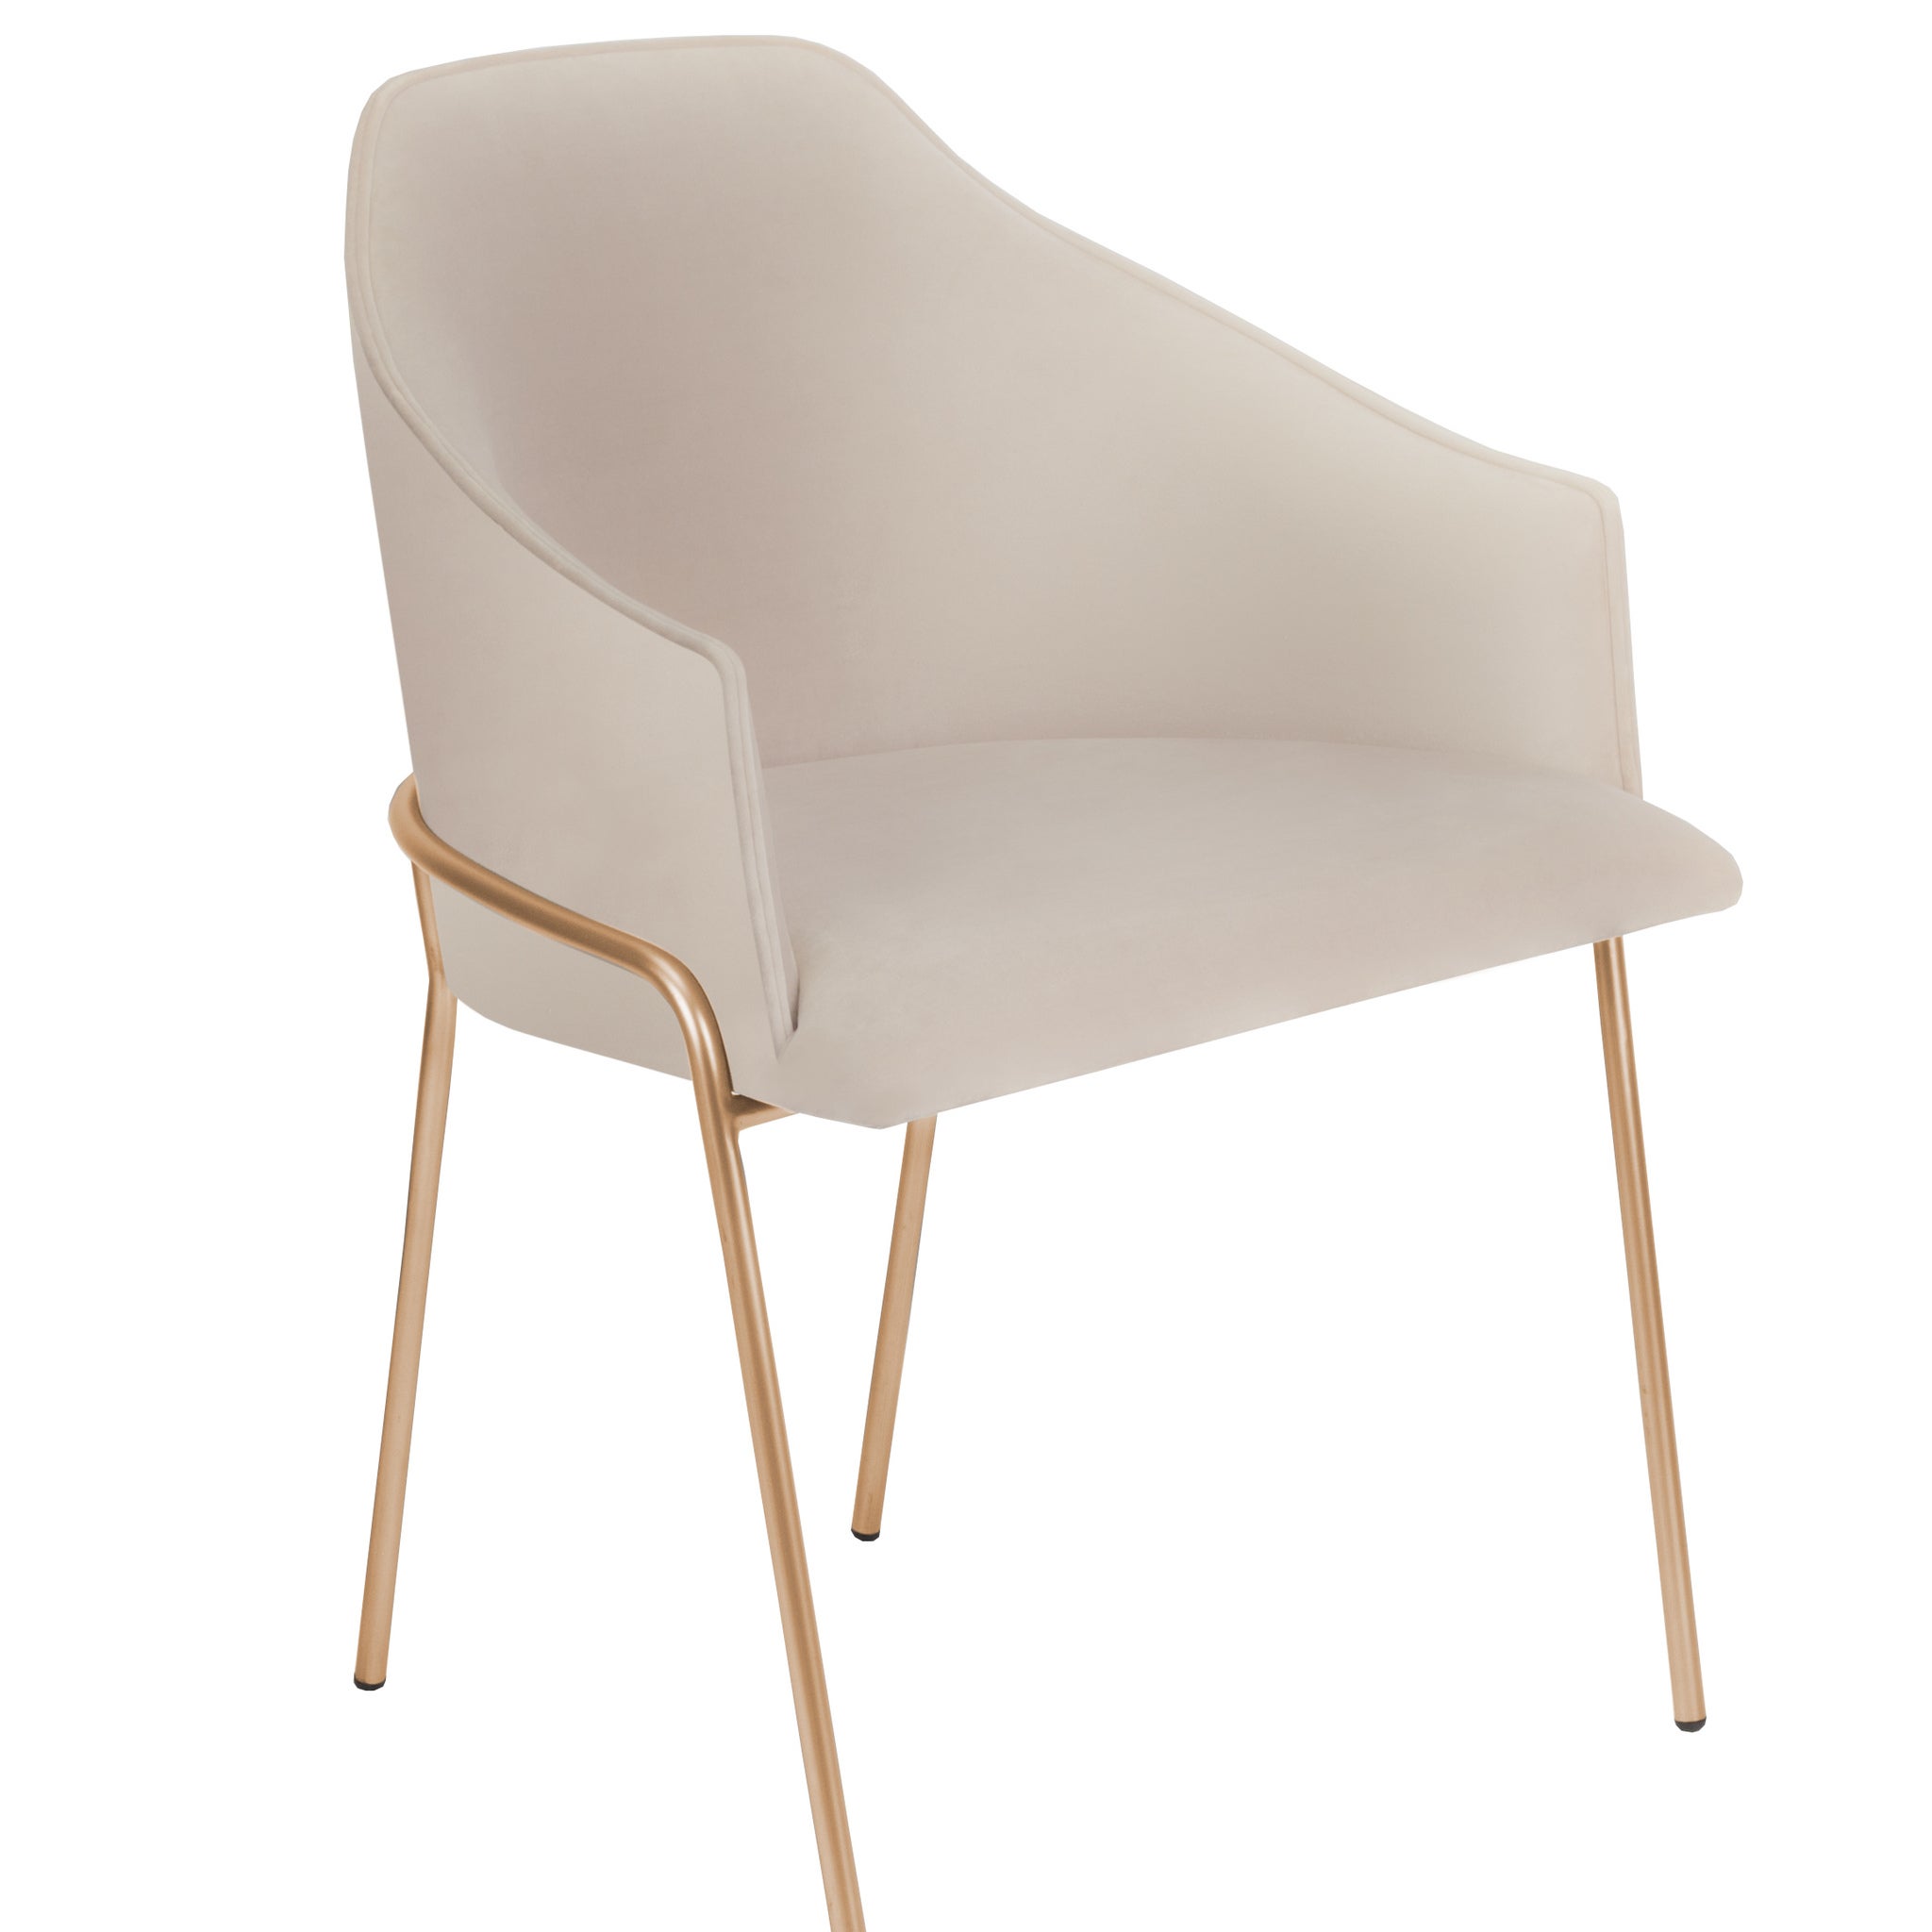 Furniture - Seating - All | cyan.design